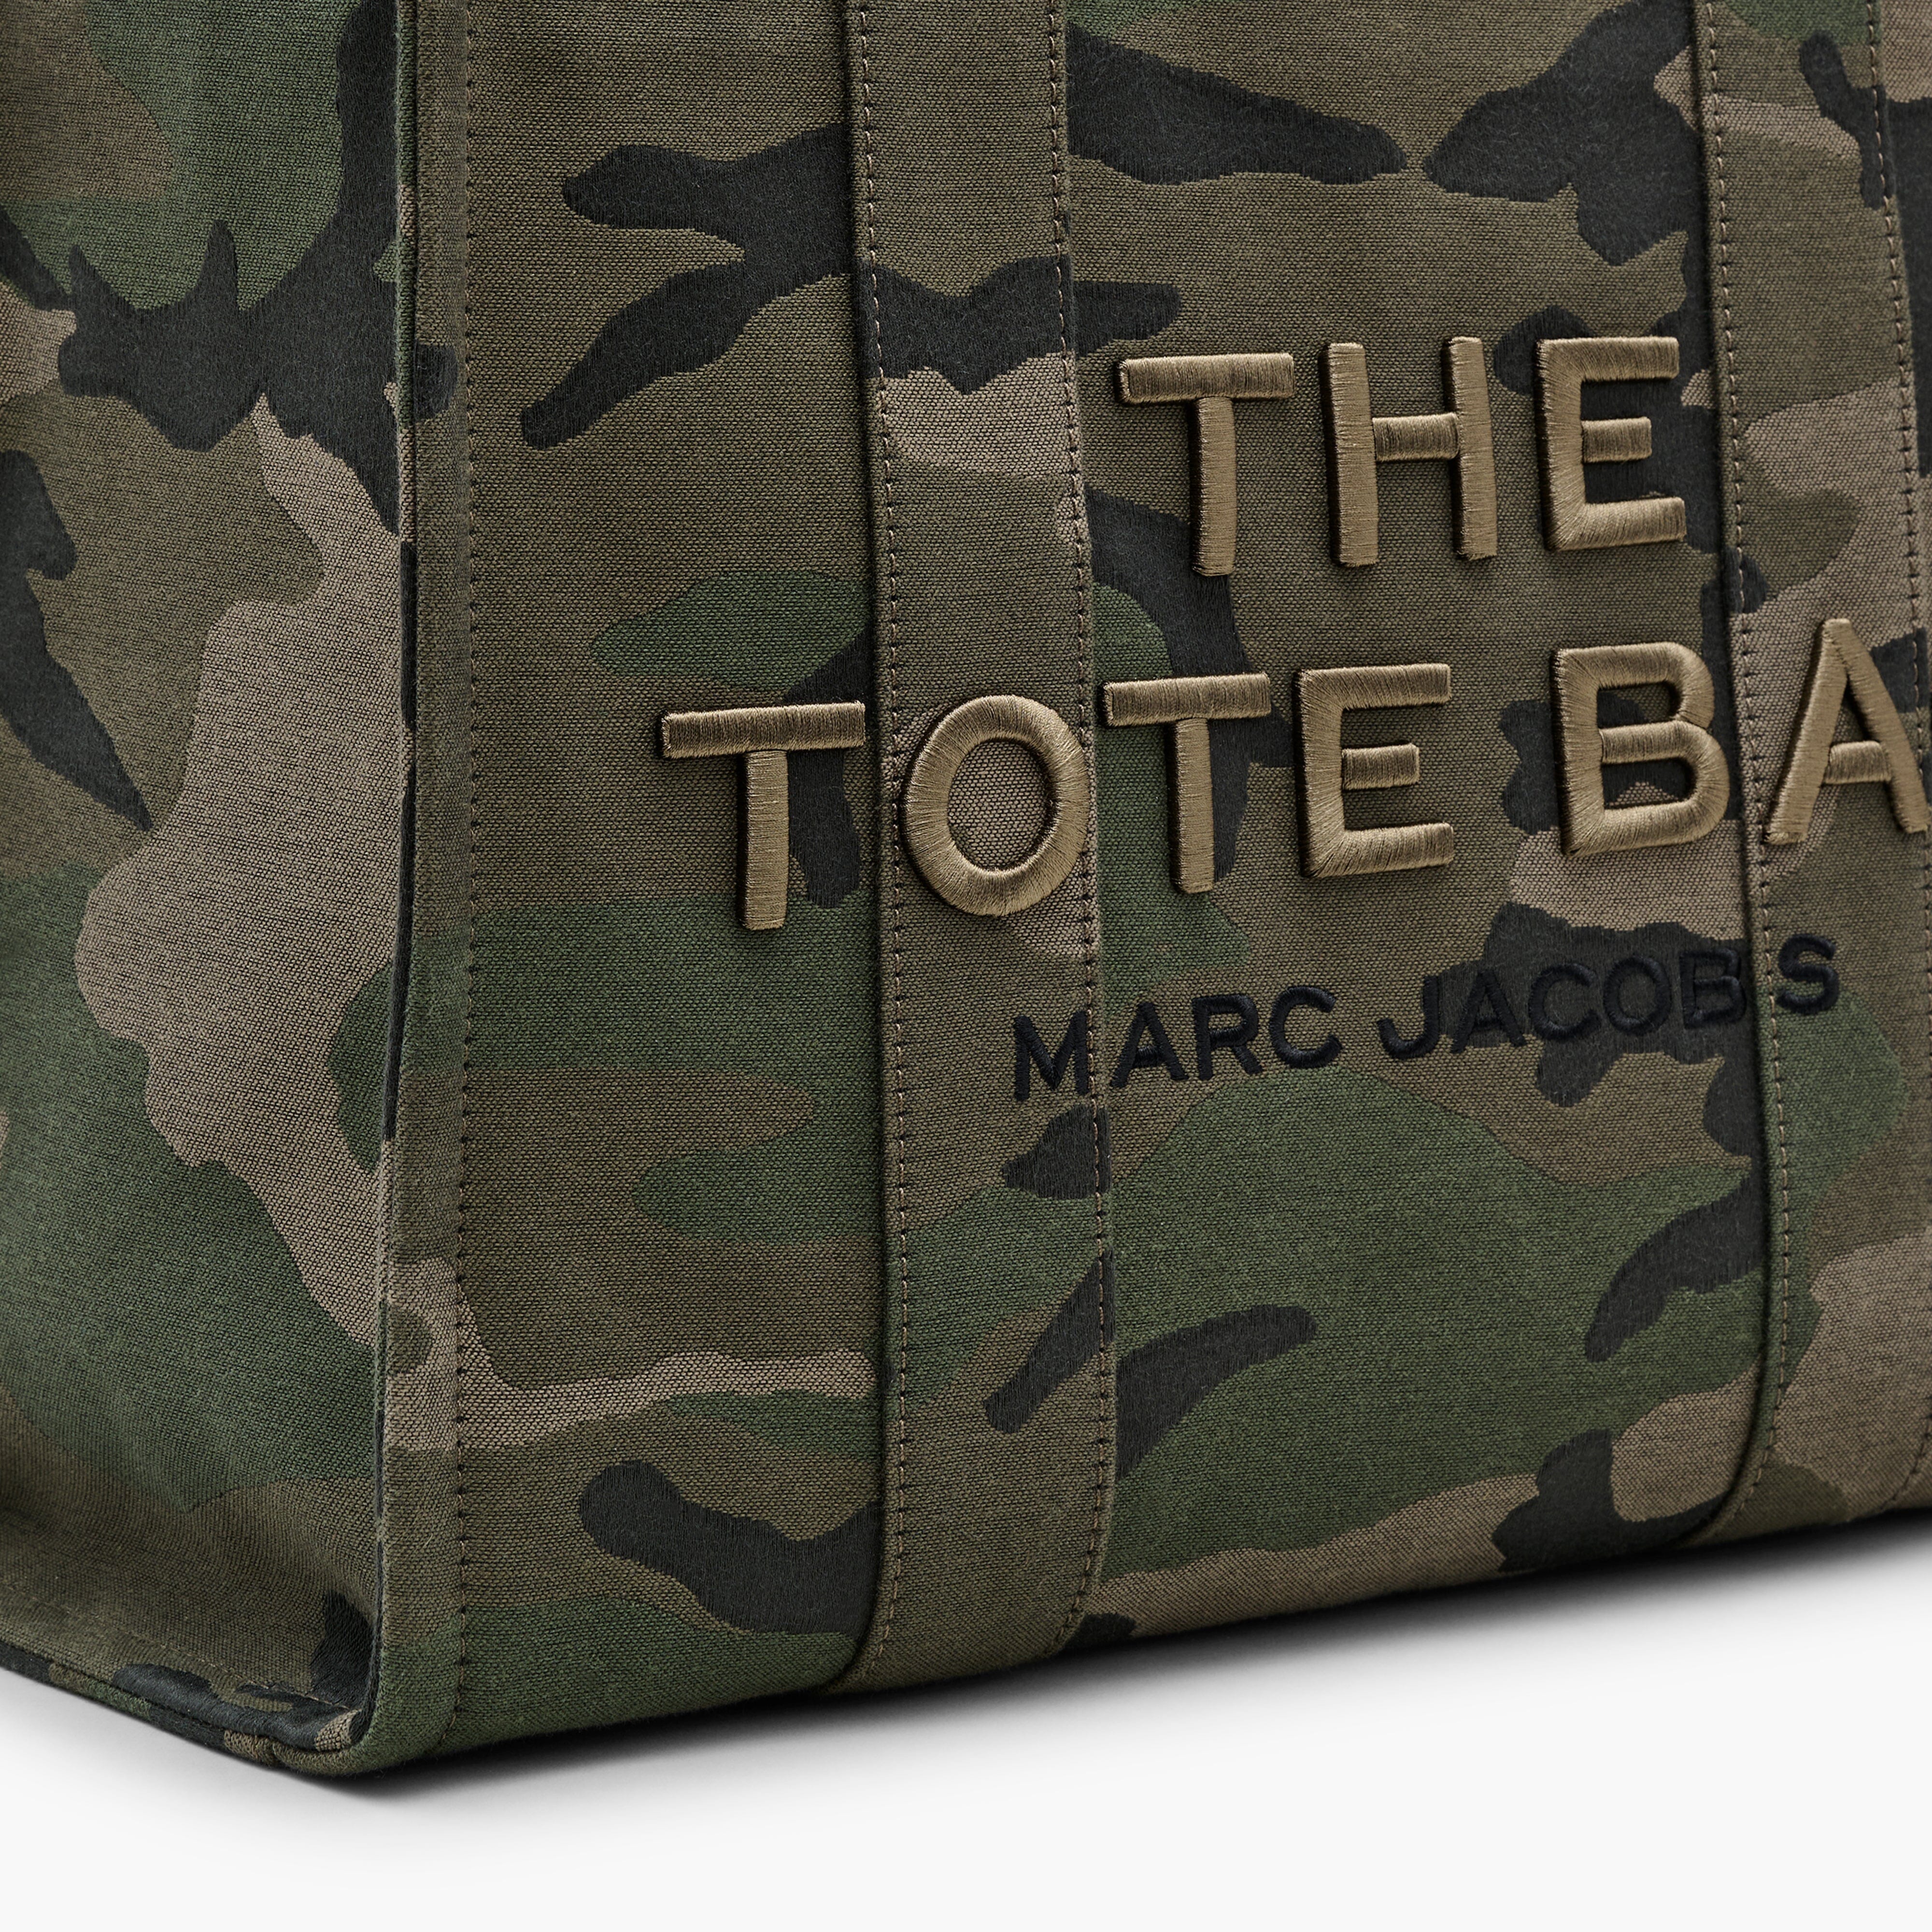 MARC JACOBS - 2S4HTT080H03-304 - The Large Tote Bag - Camo Multi Borse Marc Jacobs 